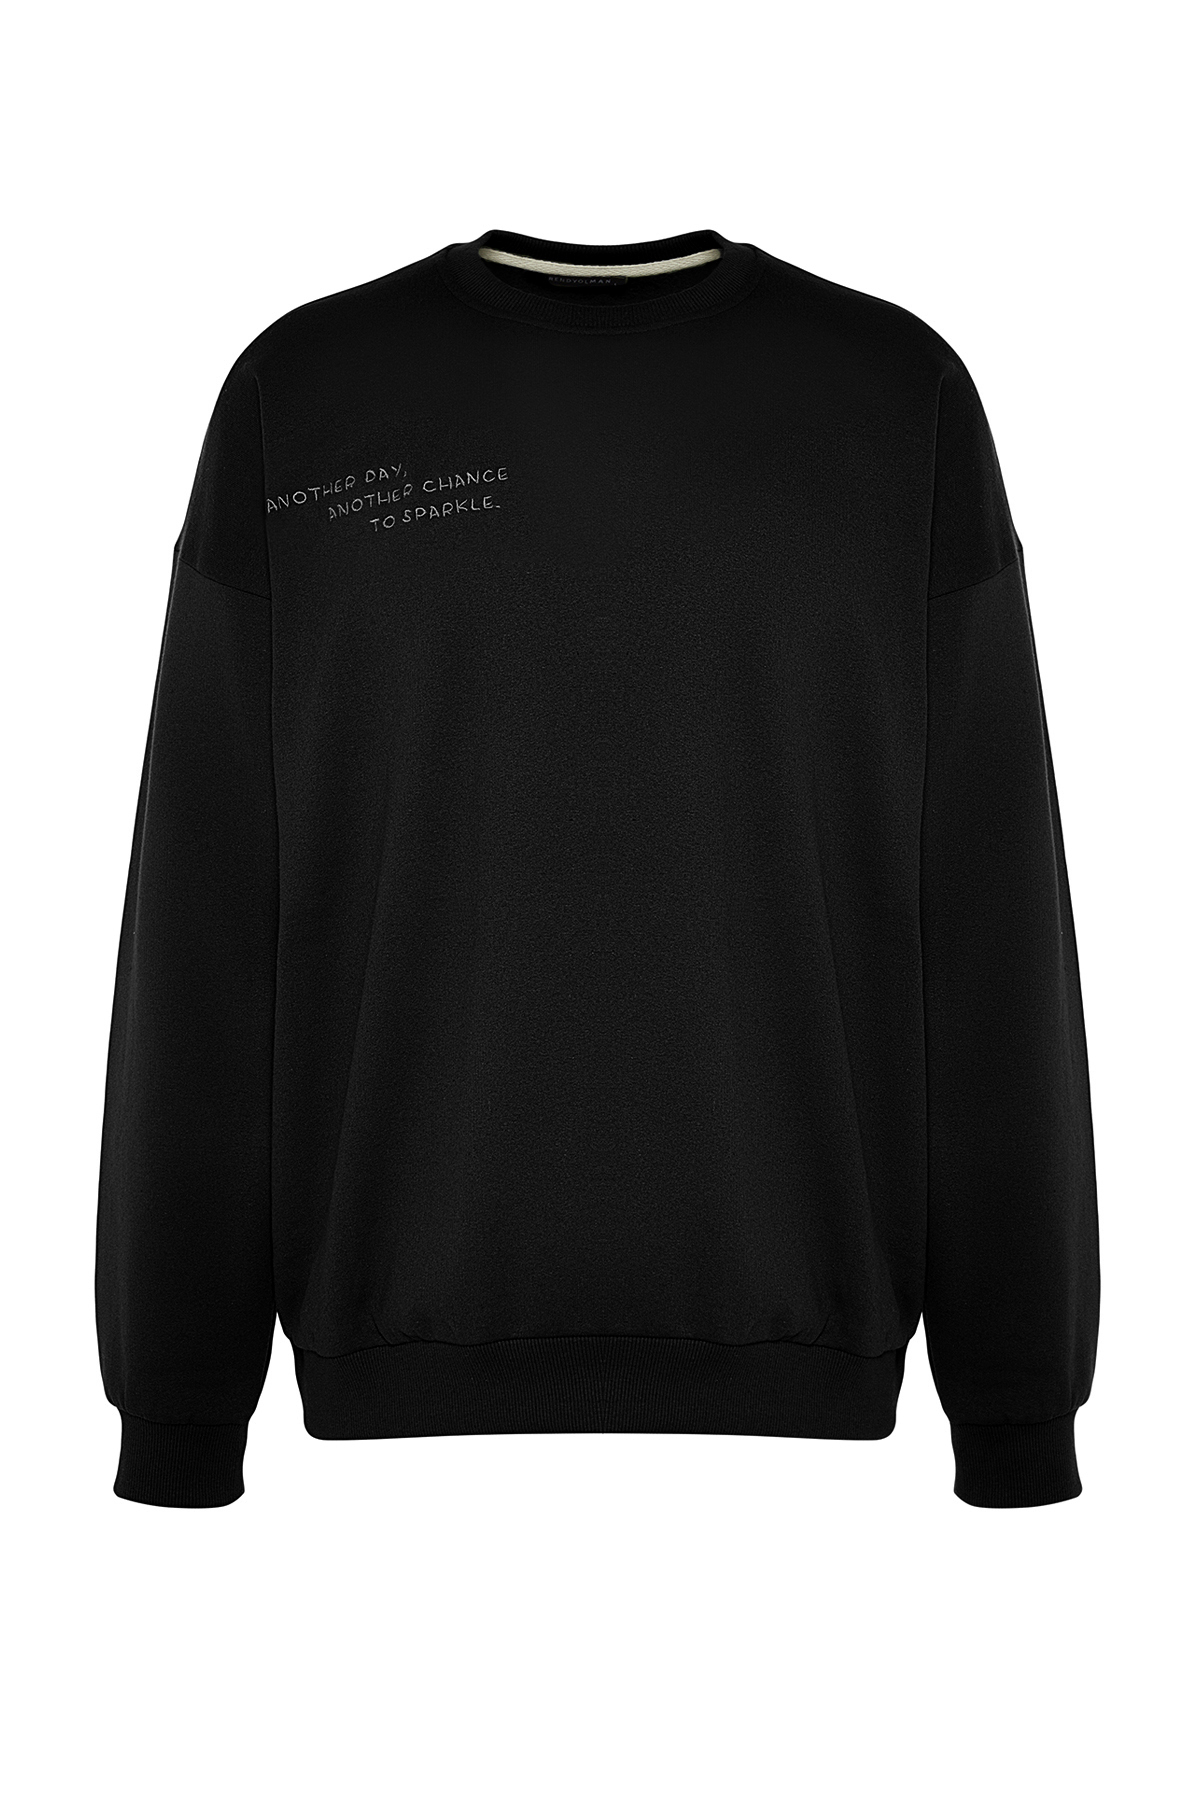 Trendyol Men's Black Oversize/Wide-cut Sweatshirt with Text Embroidery, Fleece Inside.